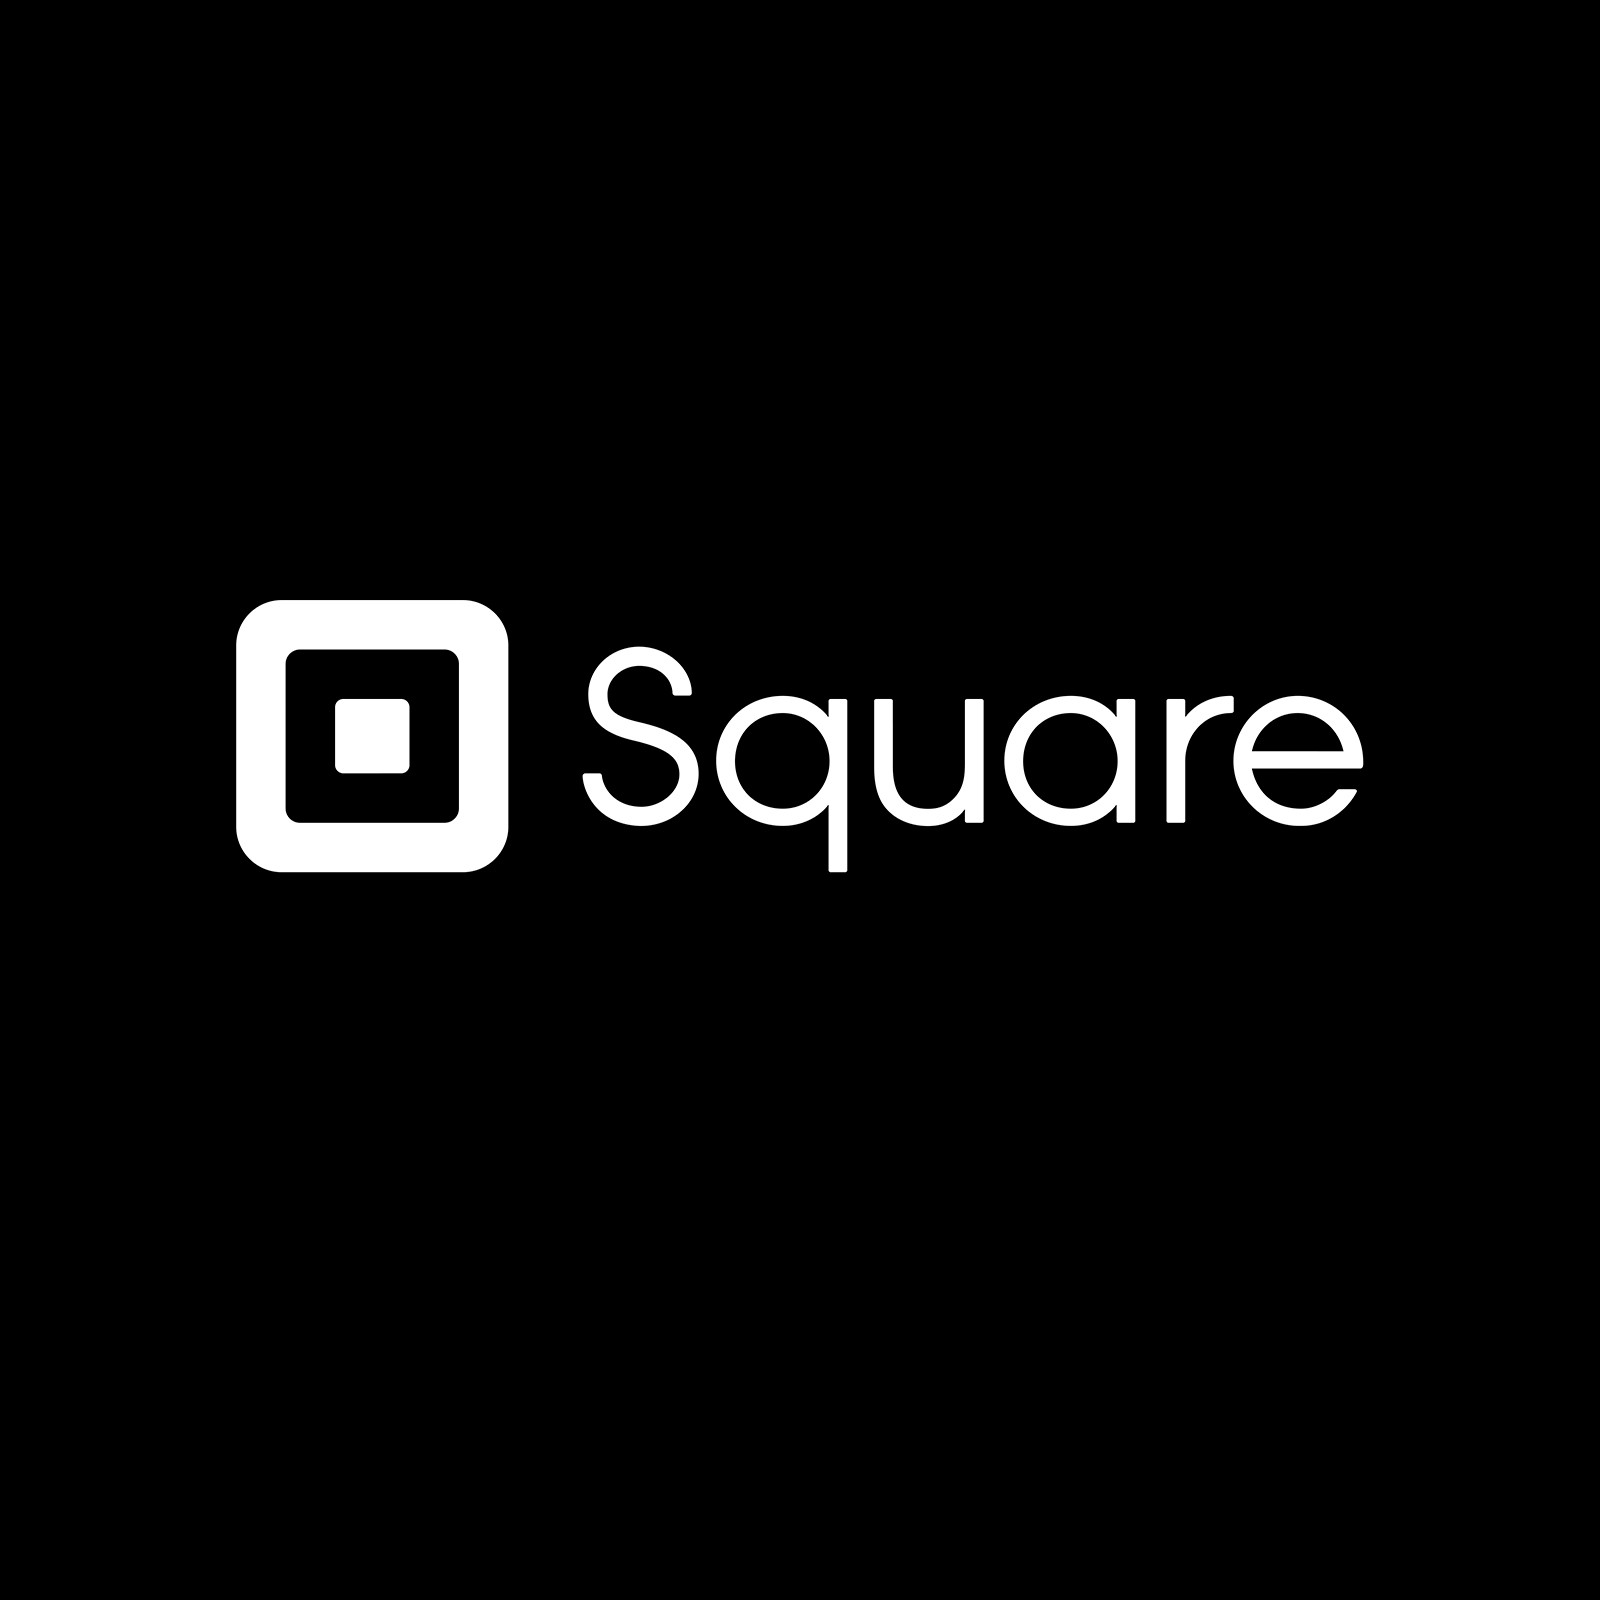 Square up Logos